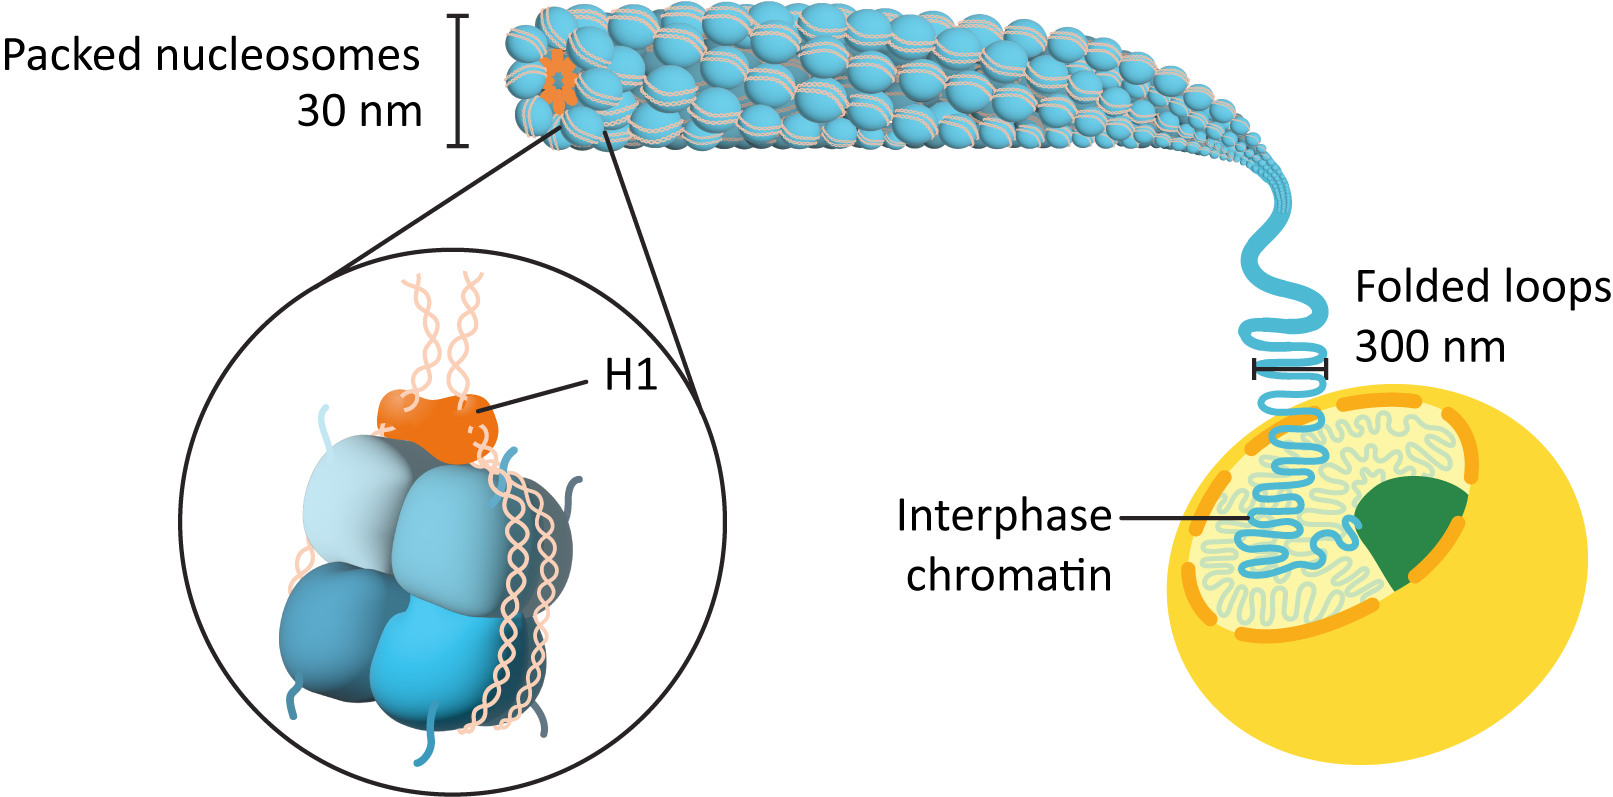 Interphase chromatin